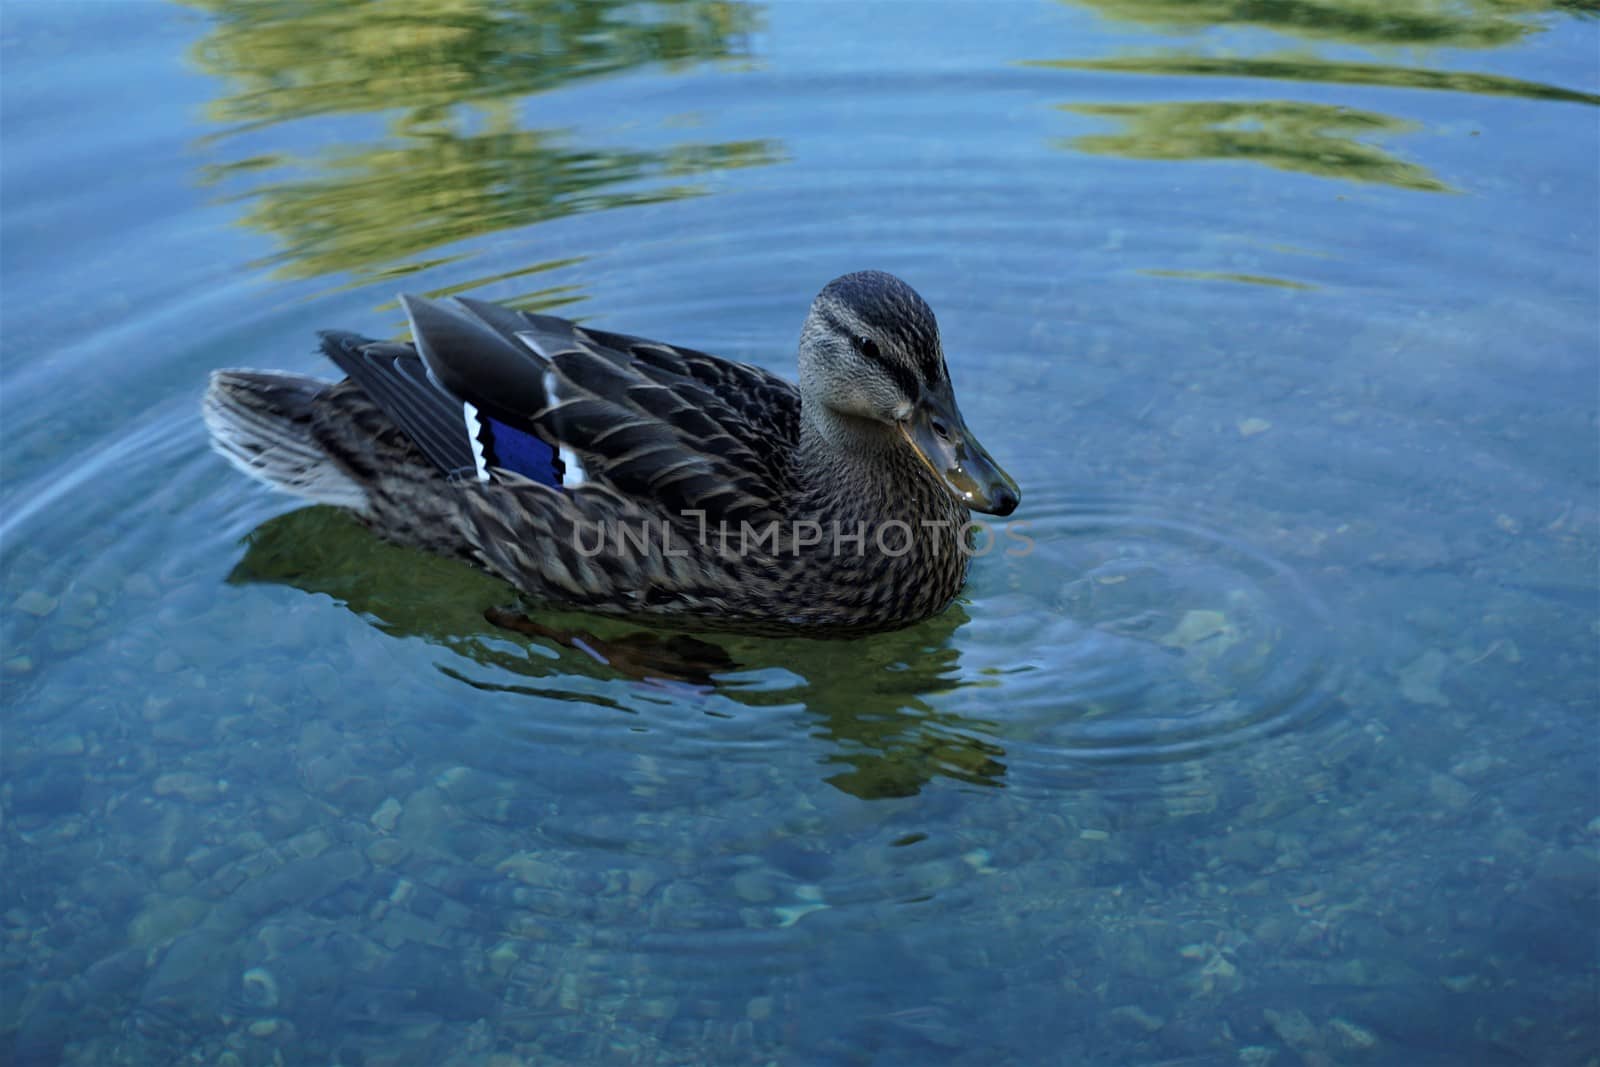 A duck on the Krka river in Kostanjevica na Krki, Slovenia